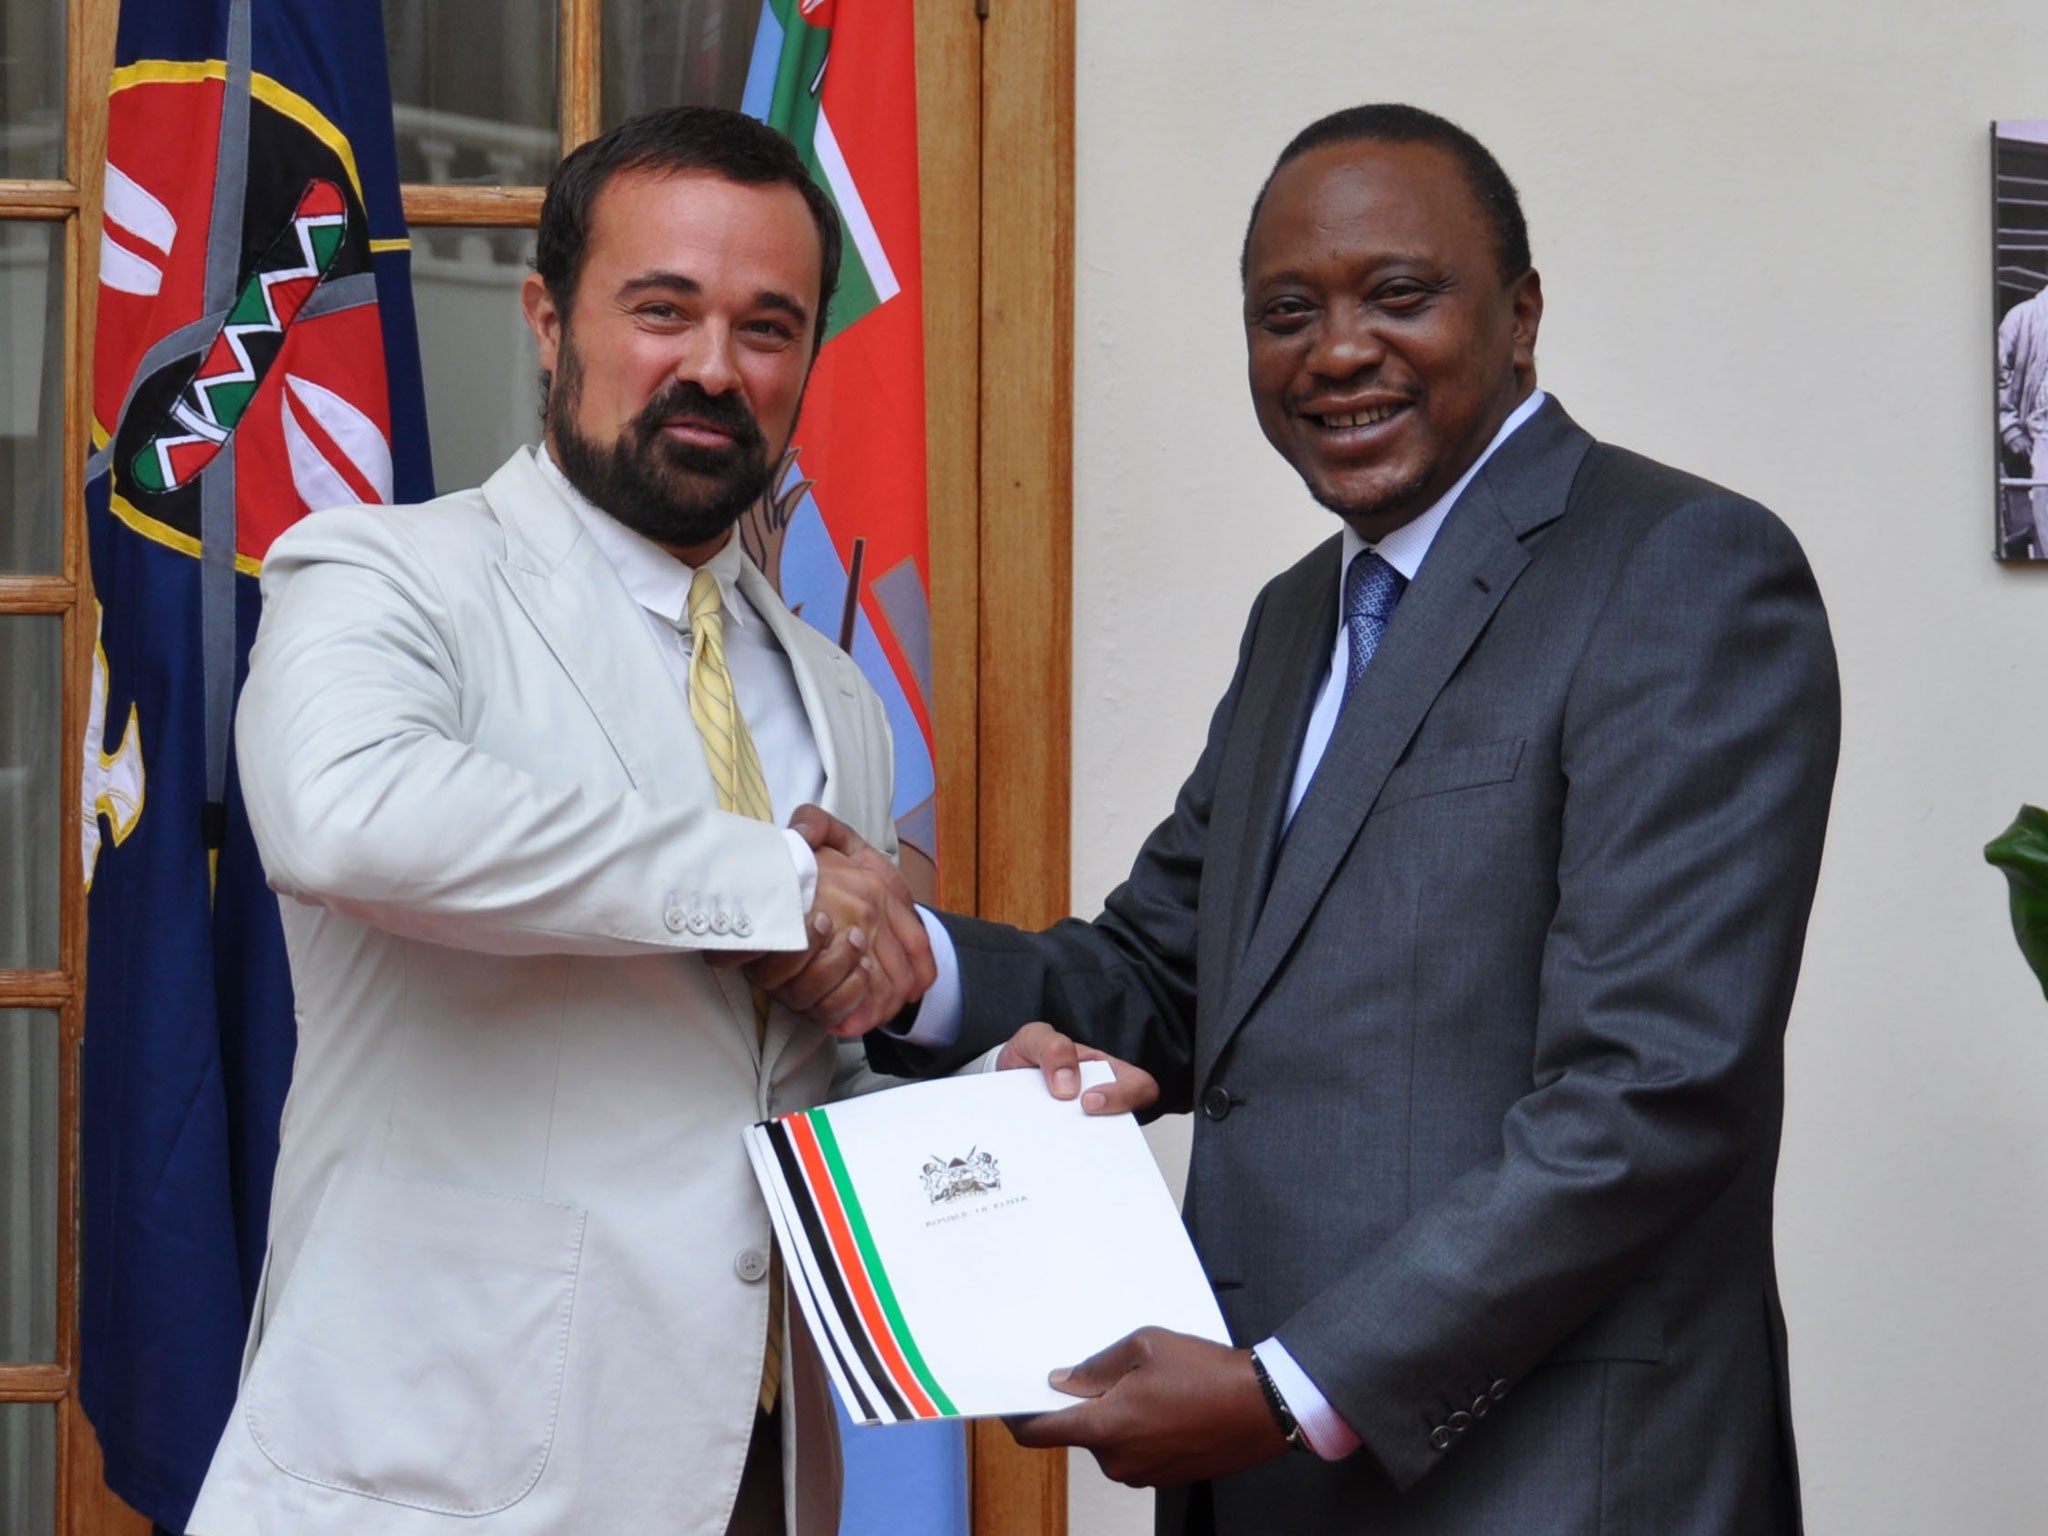 President Uhuru Kenyatta of Kenya with Independent owner Evgeny Lebedev